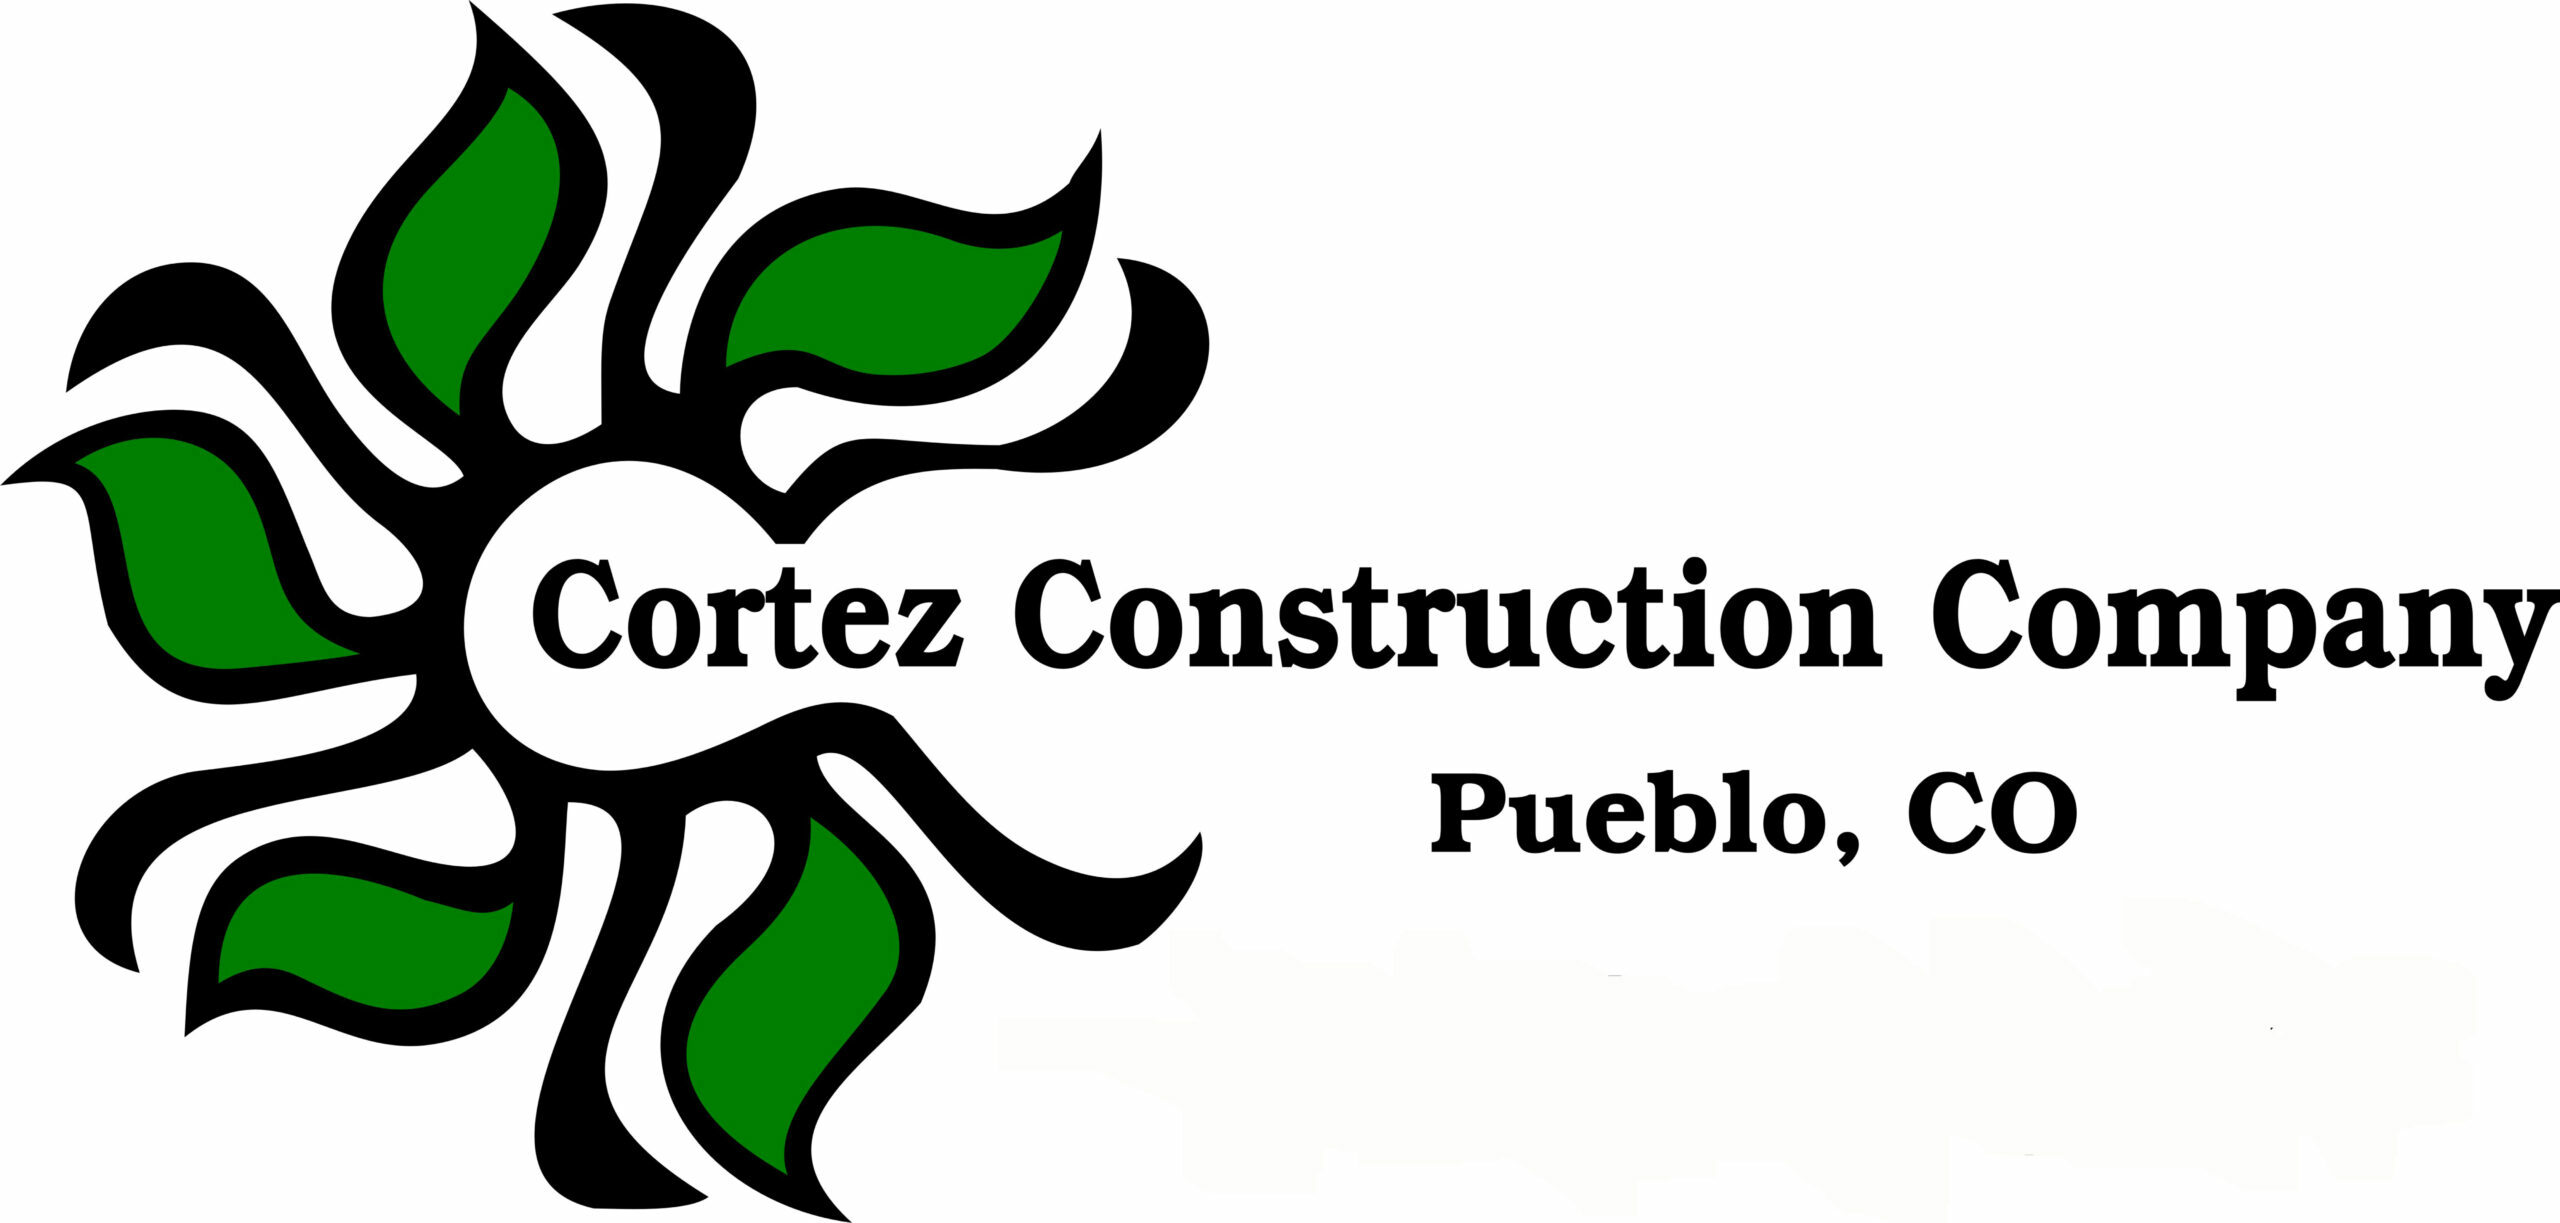 Cortez Construction Company